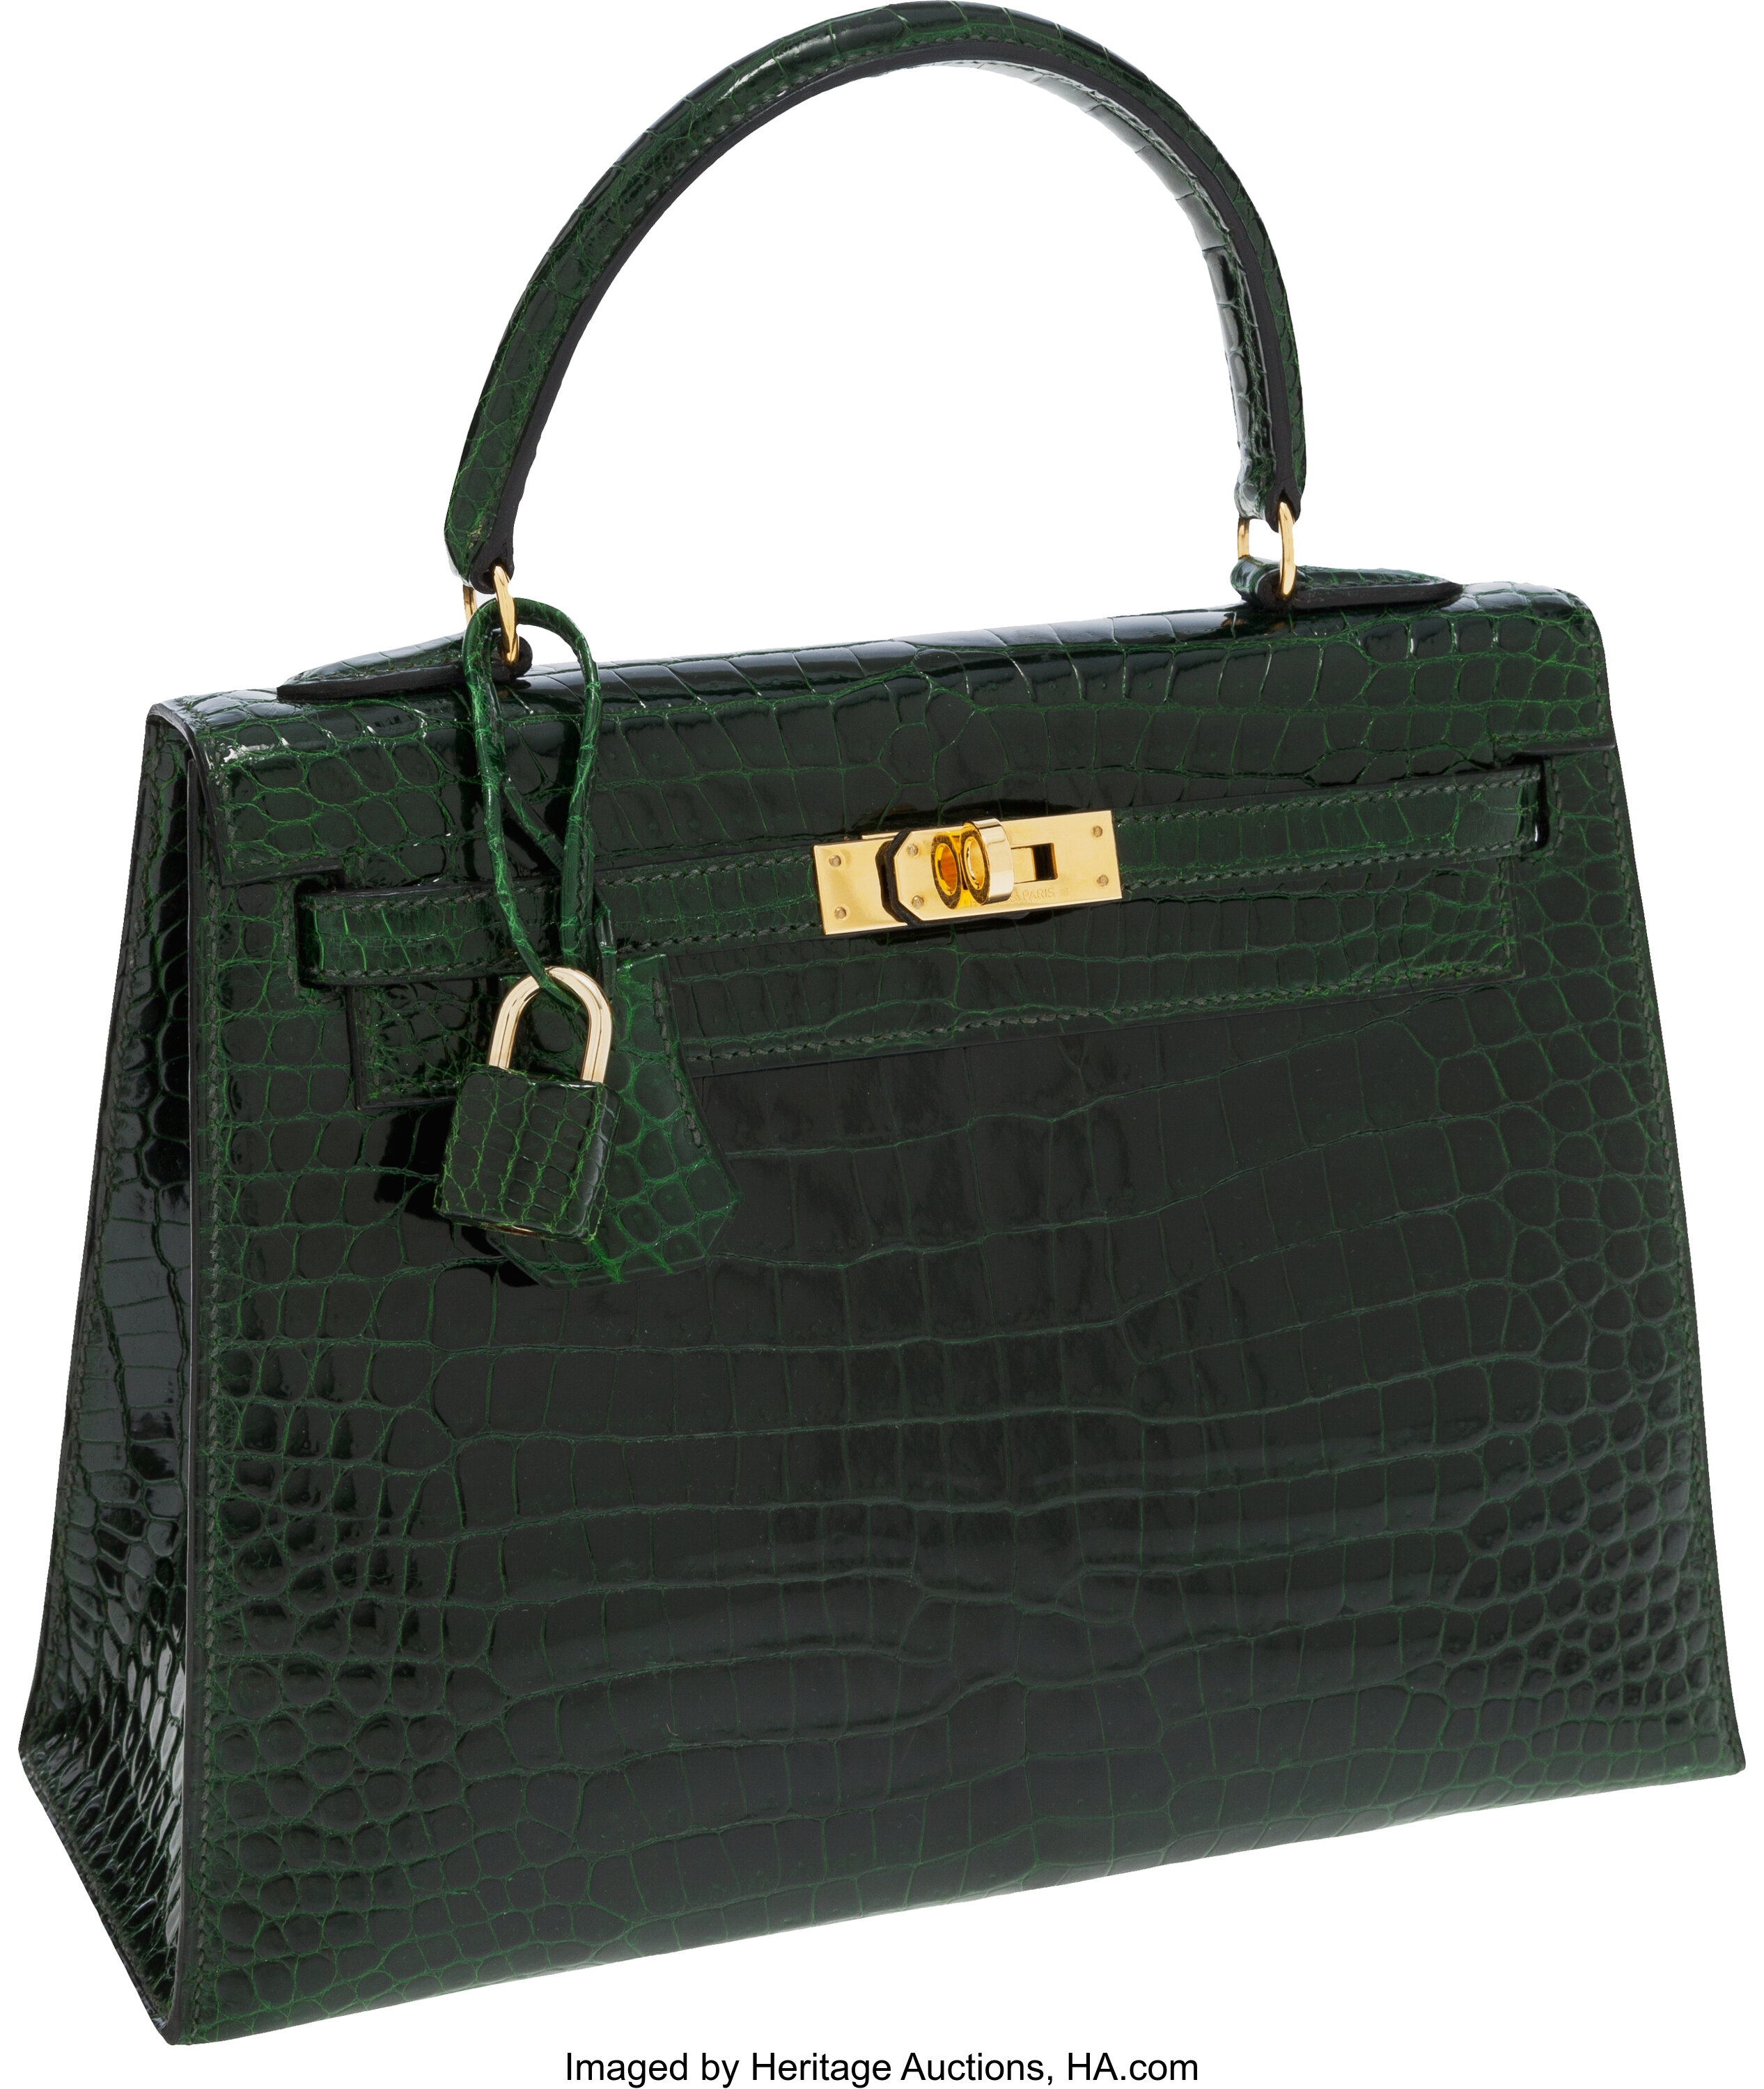 Hermes Birkin Bag 25cm Emerald Crocodile Gold Hardware